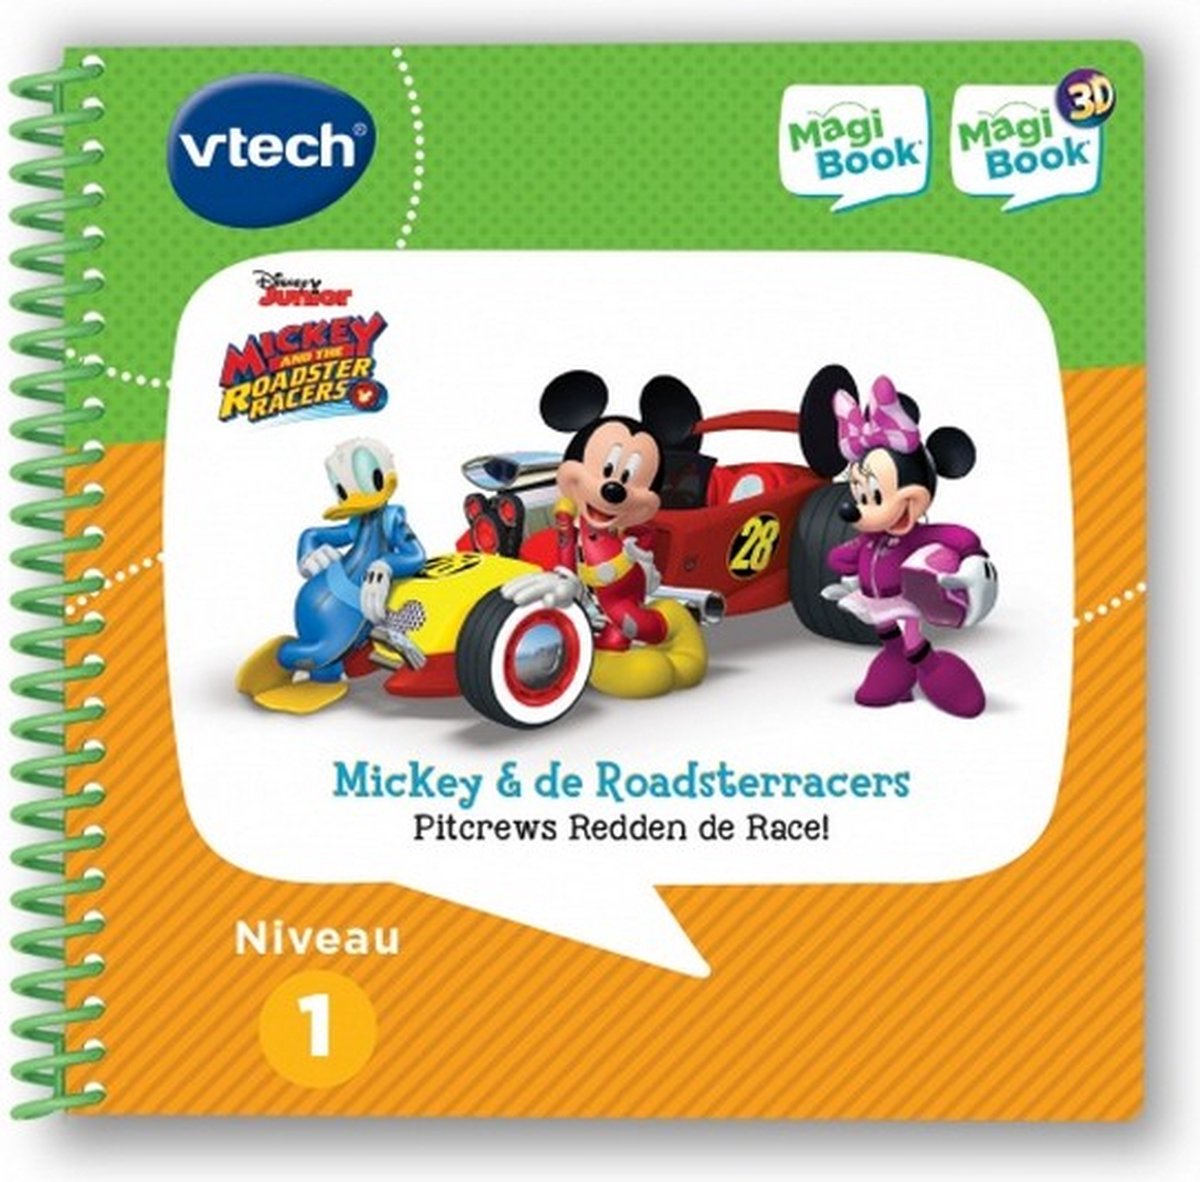 MagiBook - Mickey & de Roadsterracers